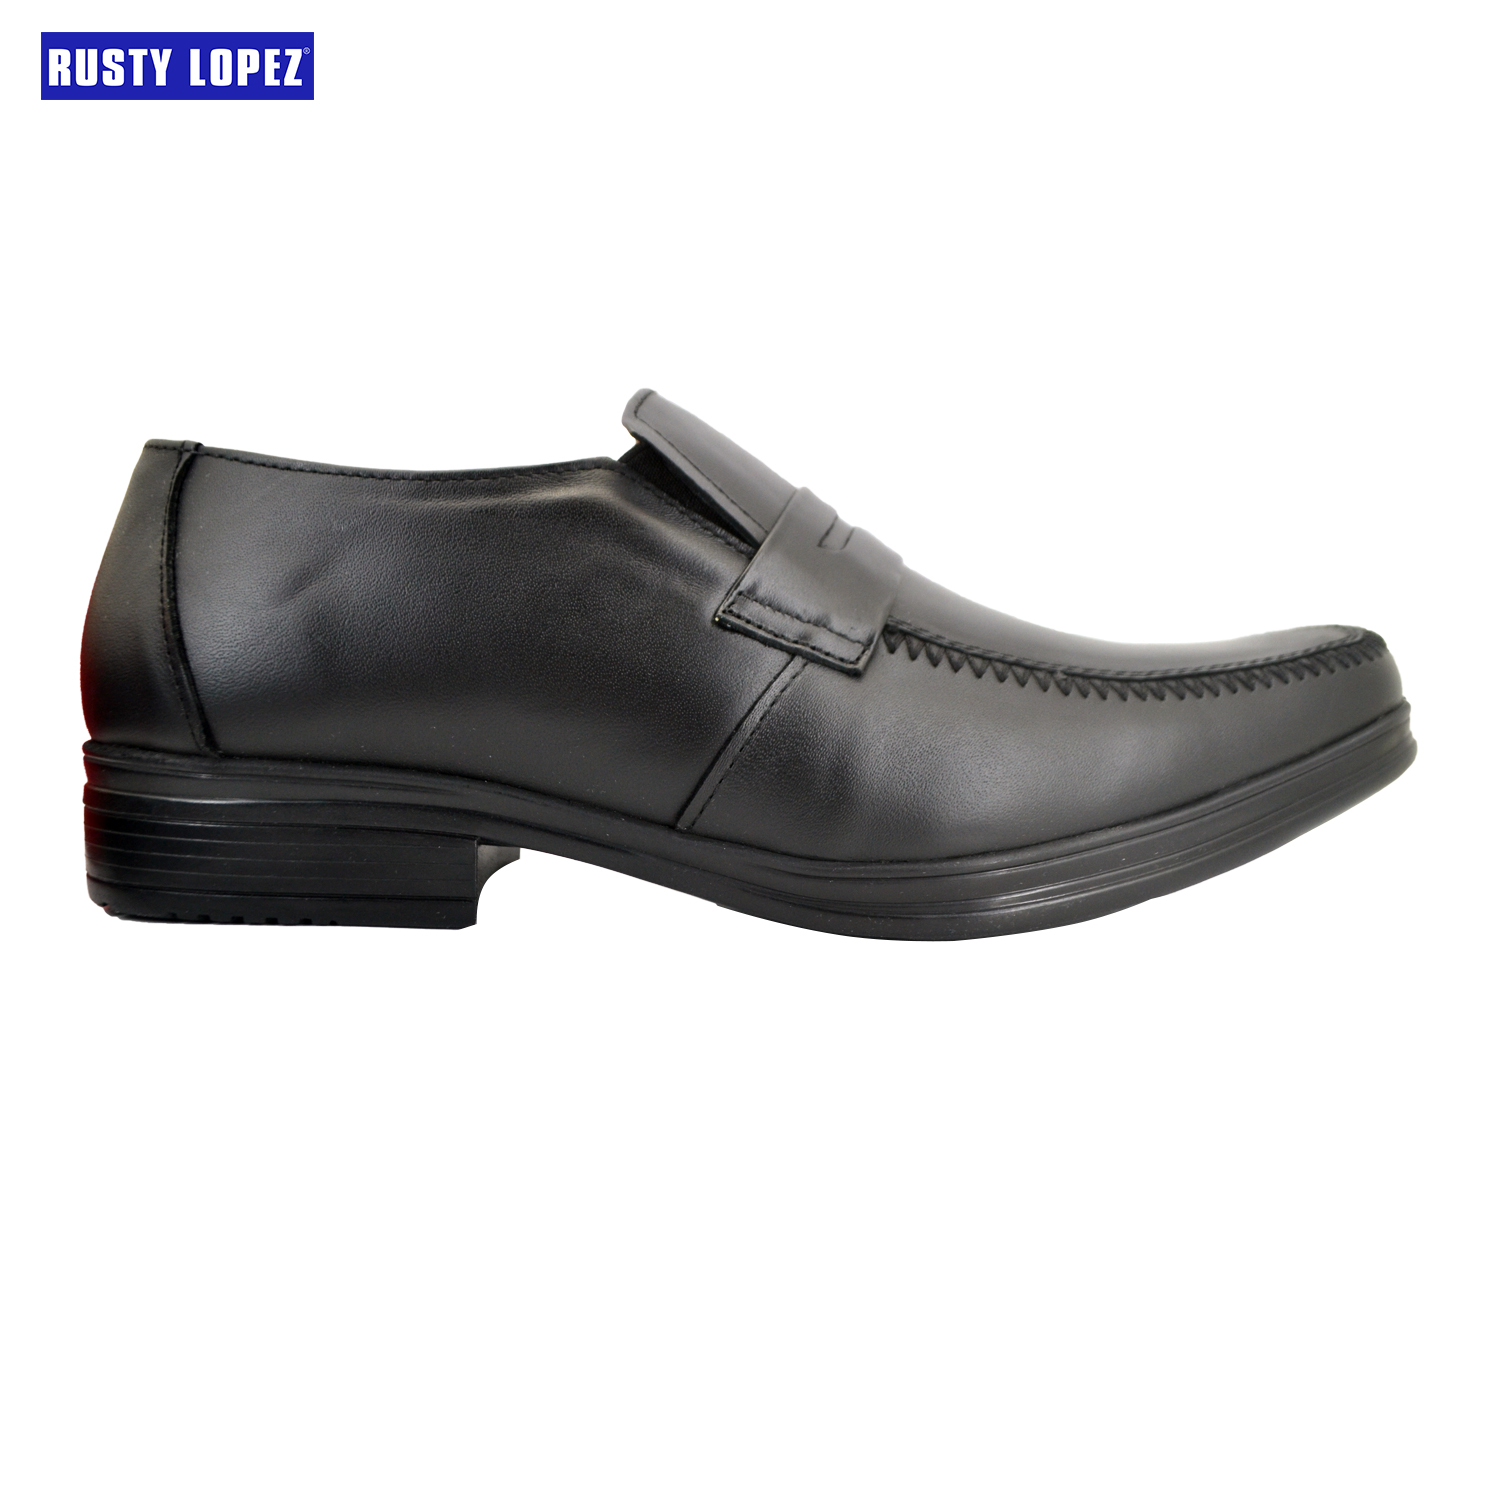 Rusty Lopez Men’s Formal Shoes – RMG23004F22